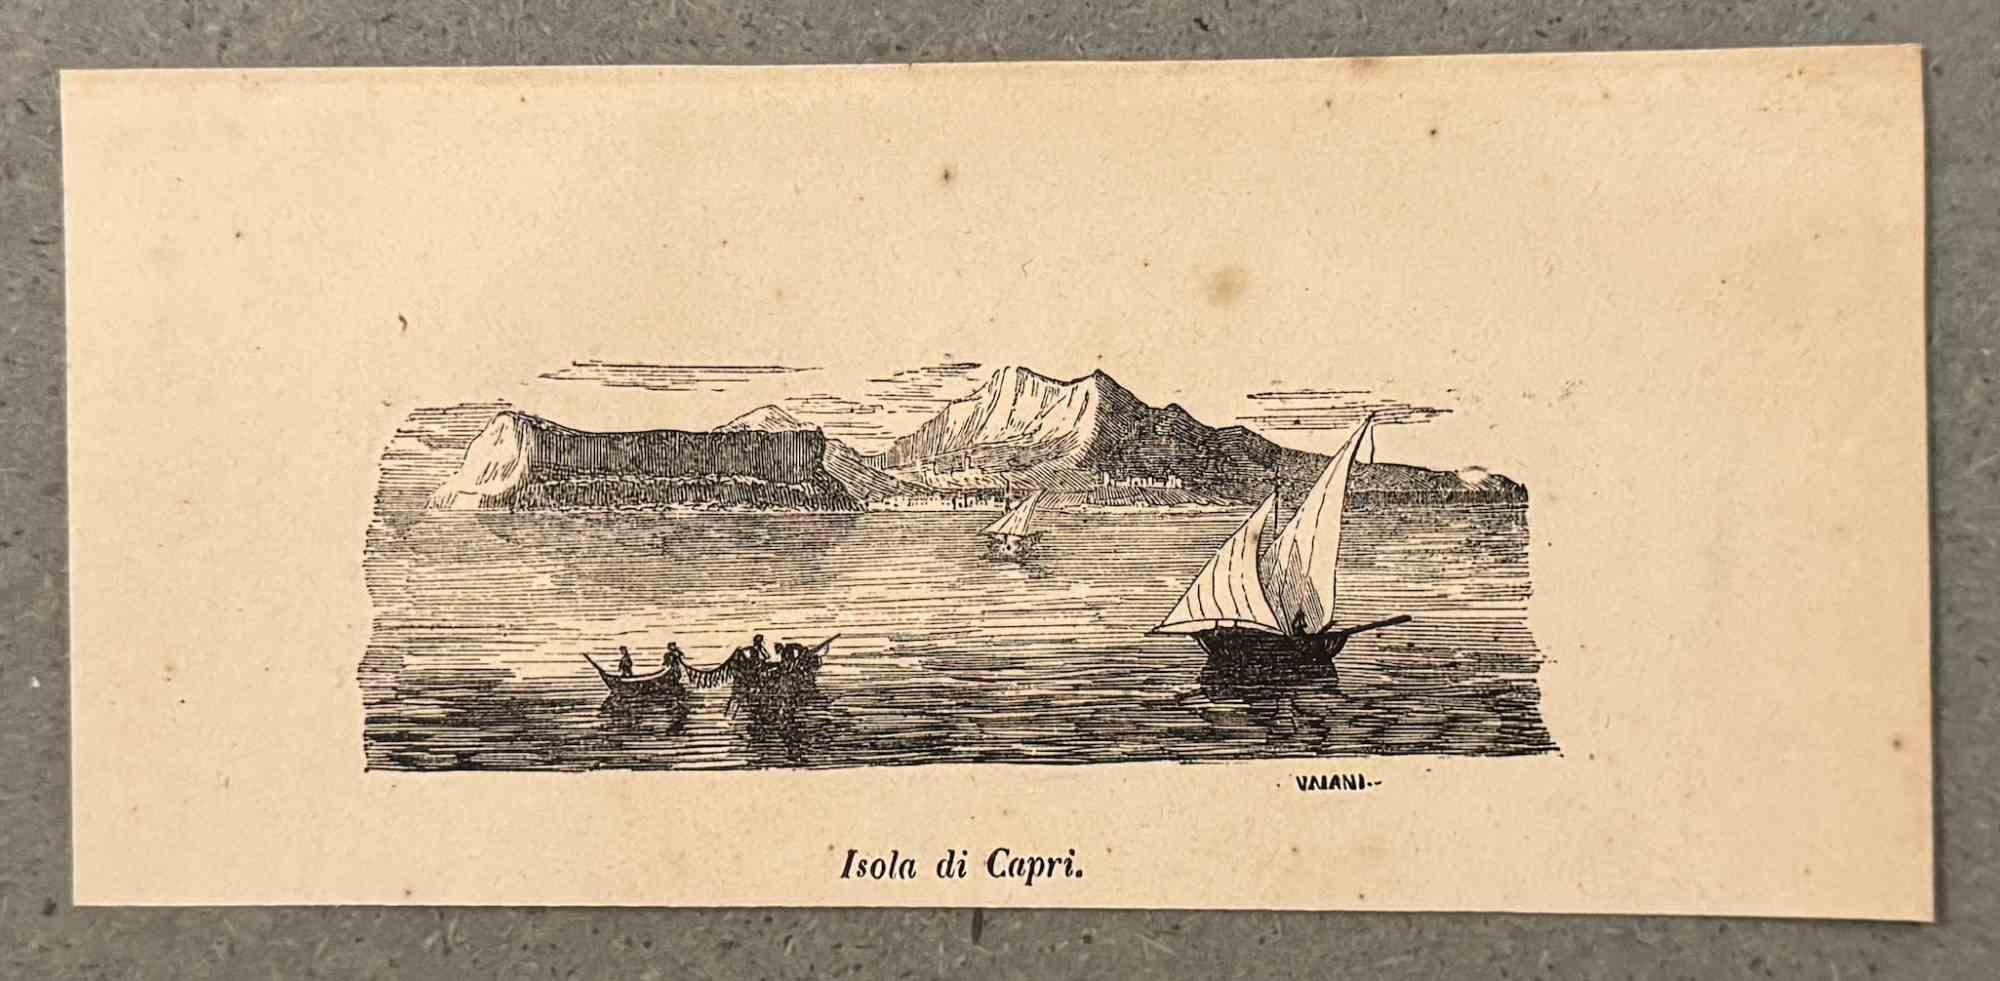 Various Artists Figurative Print - Capri Island - Lithograph - 19th Century 